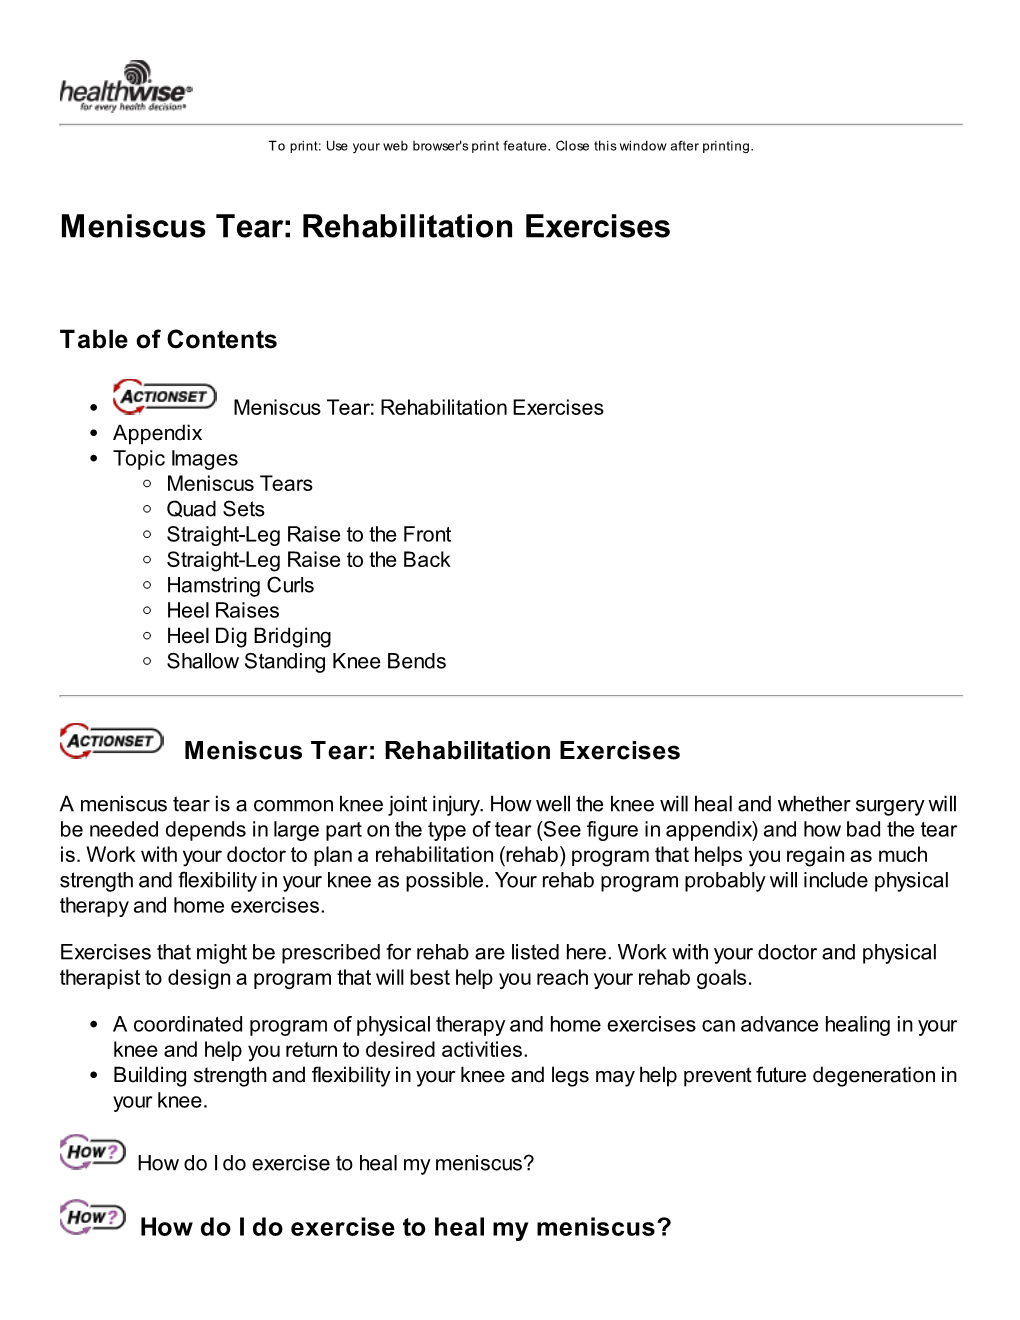 Meniscus Tear: Rehabilitation Exercises